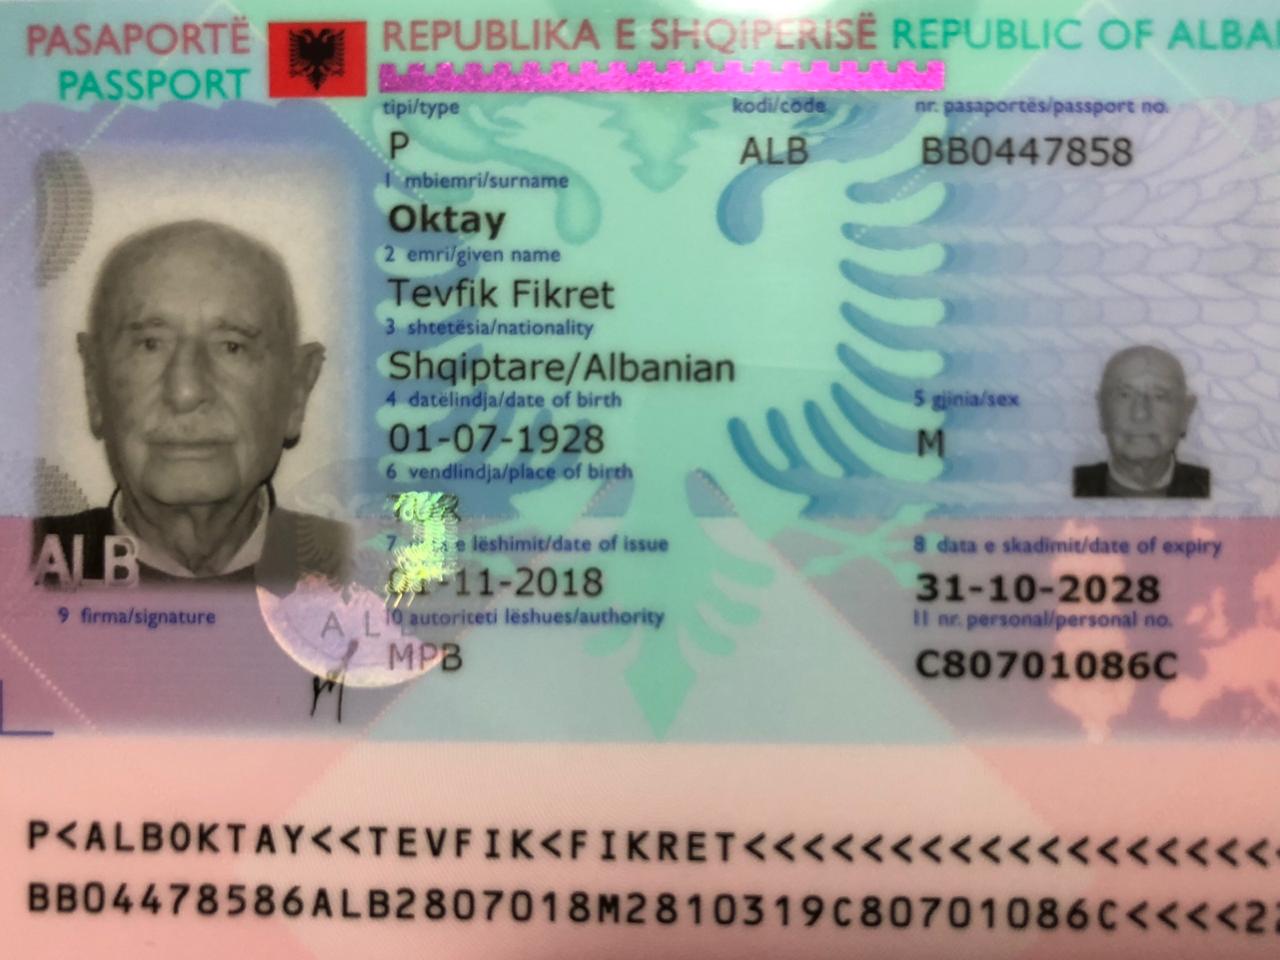 Паспорт албании